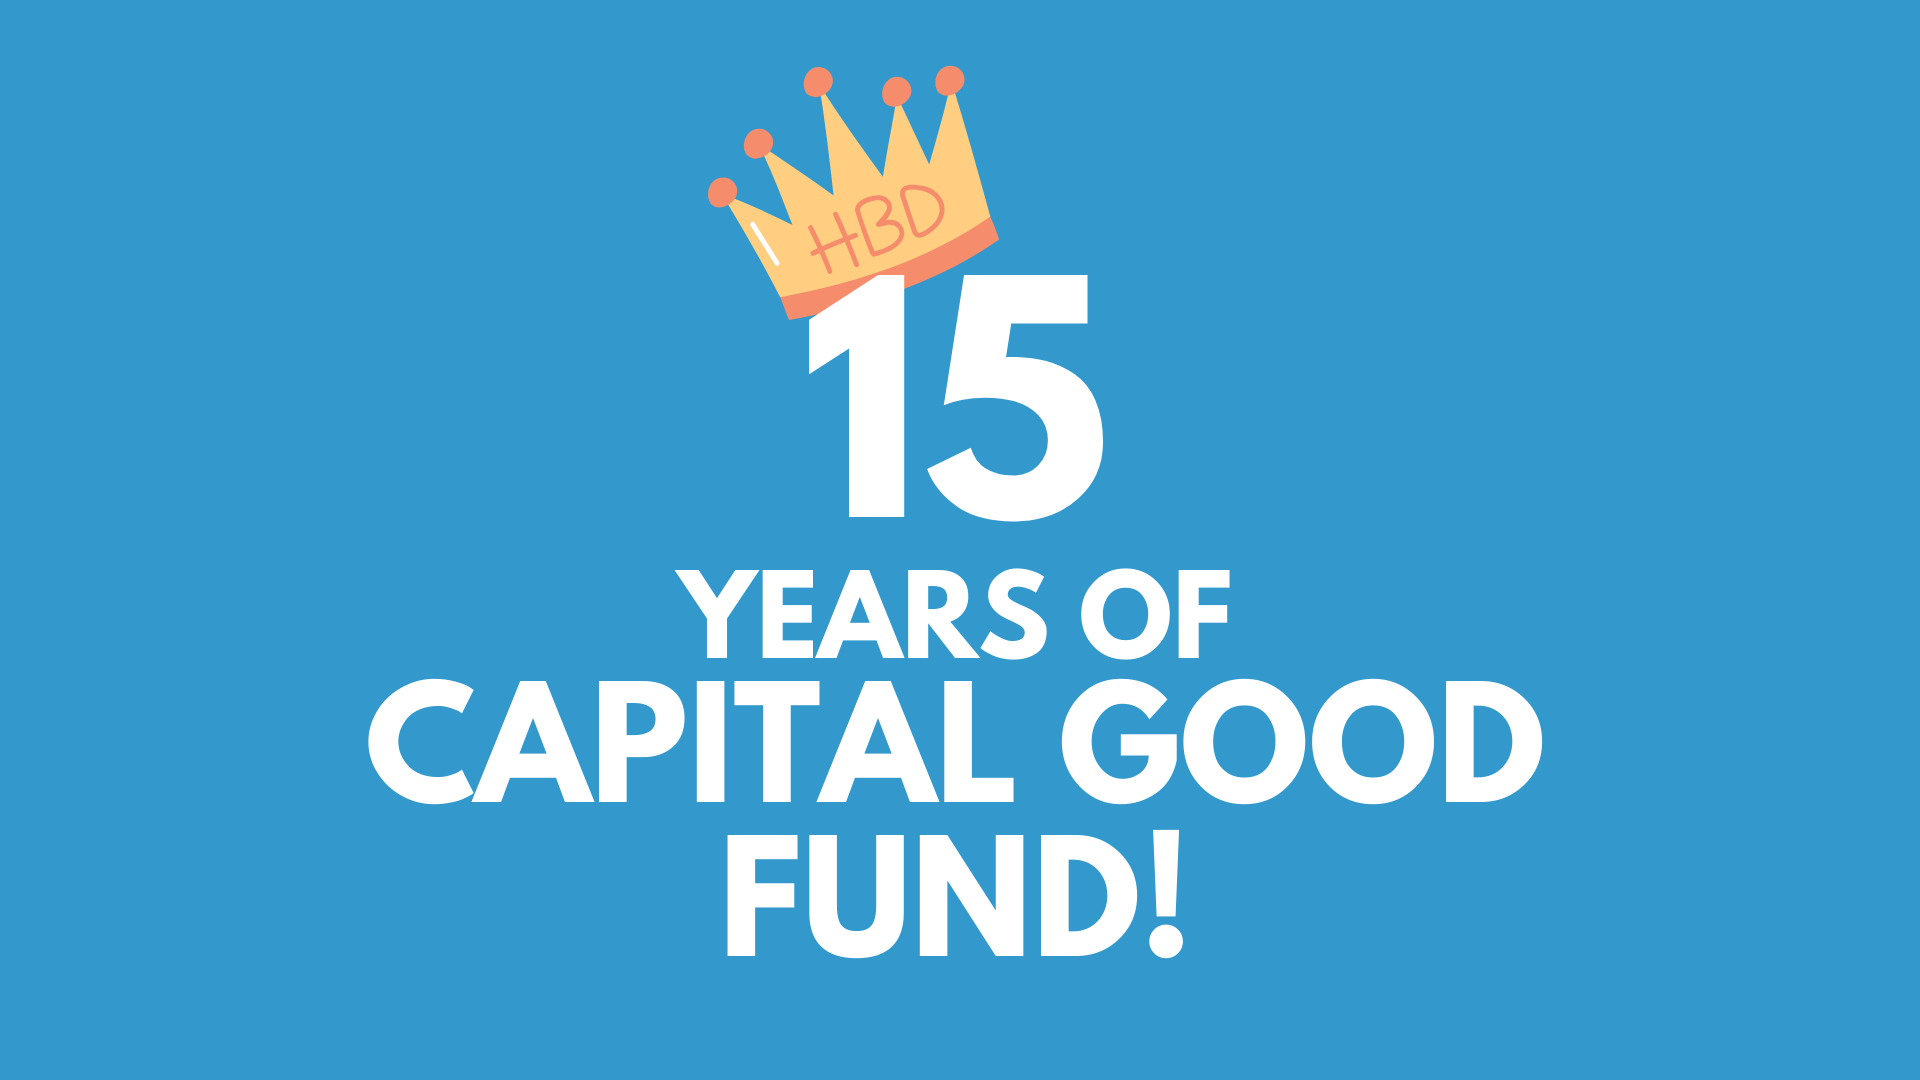 Happy 15th Birthday, Capital Good Fund!